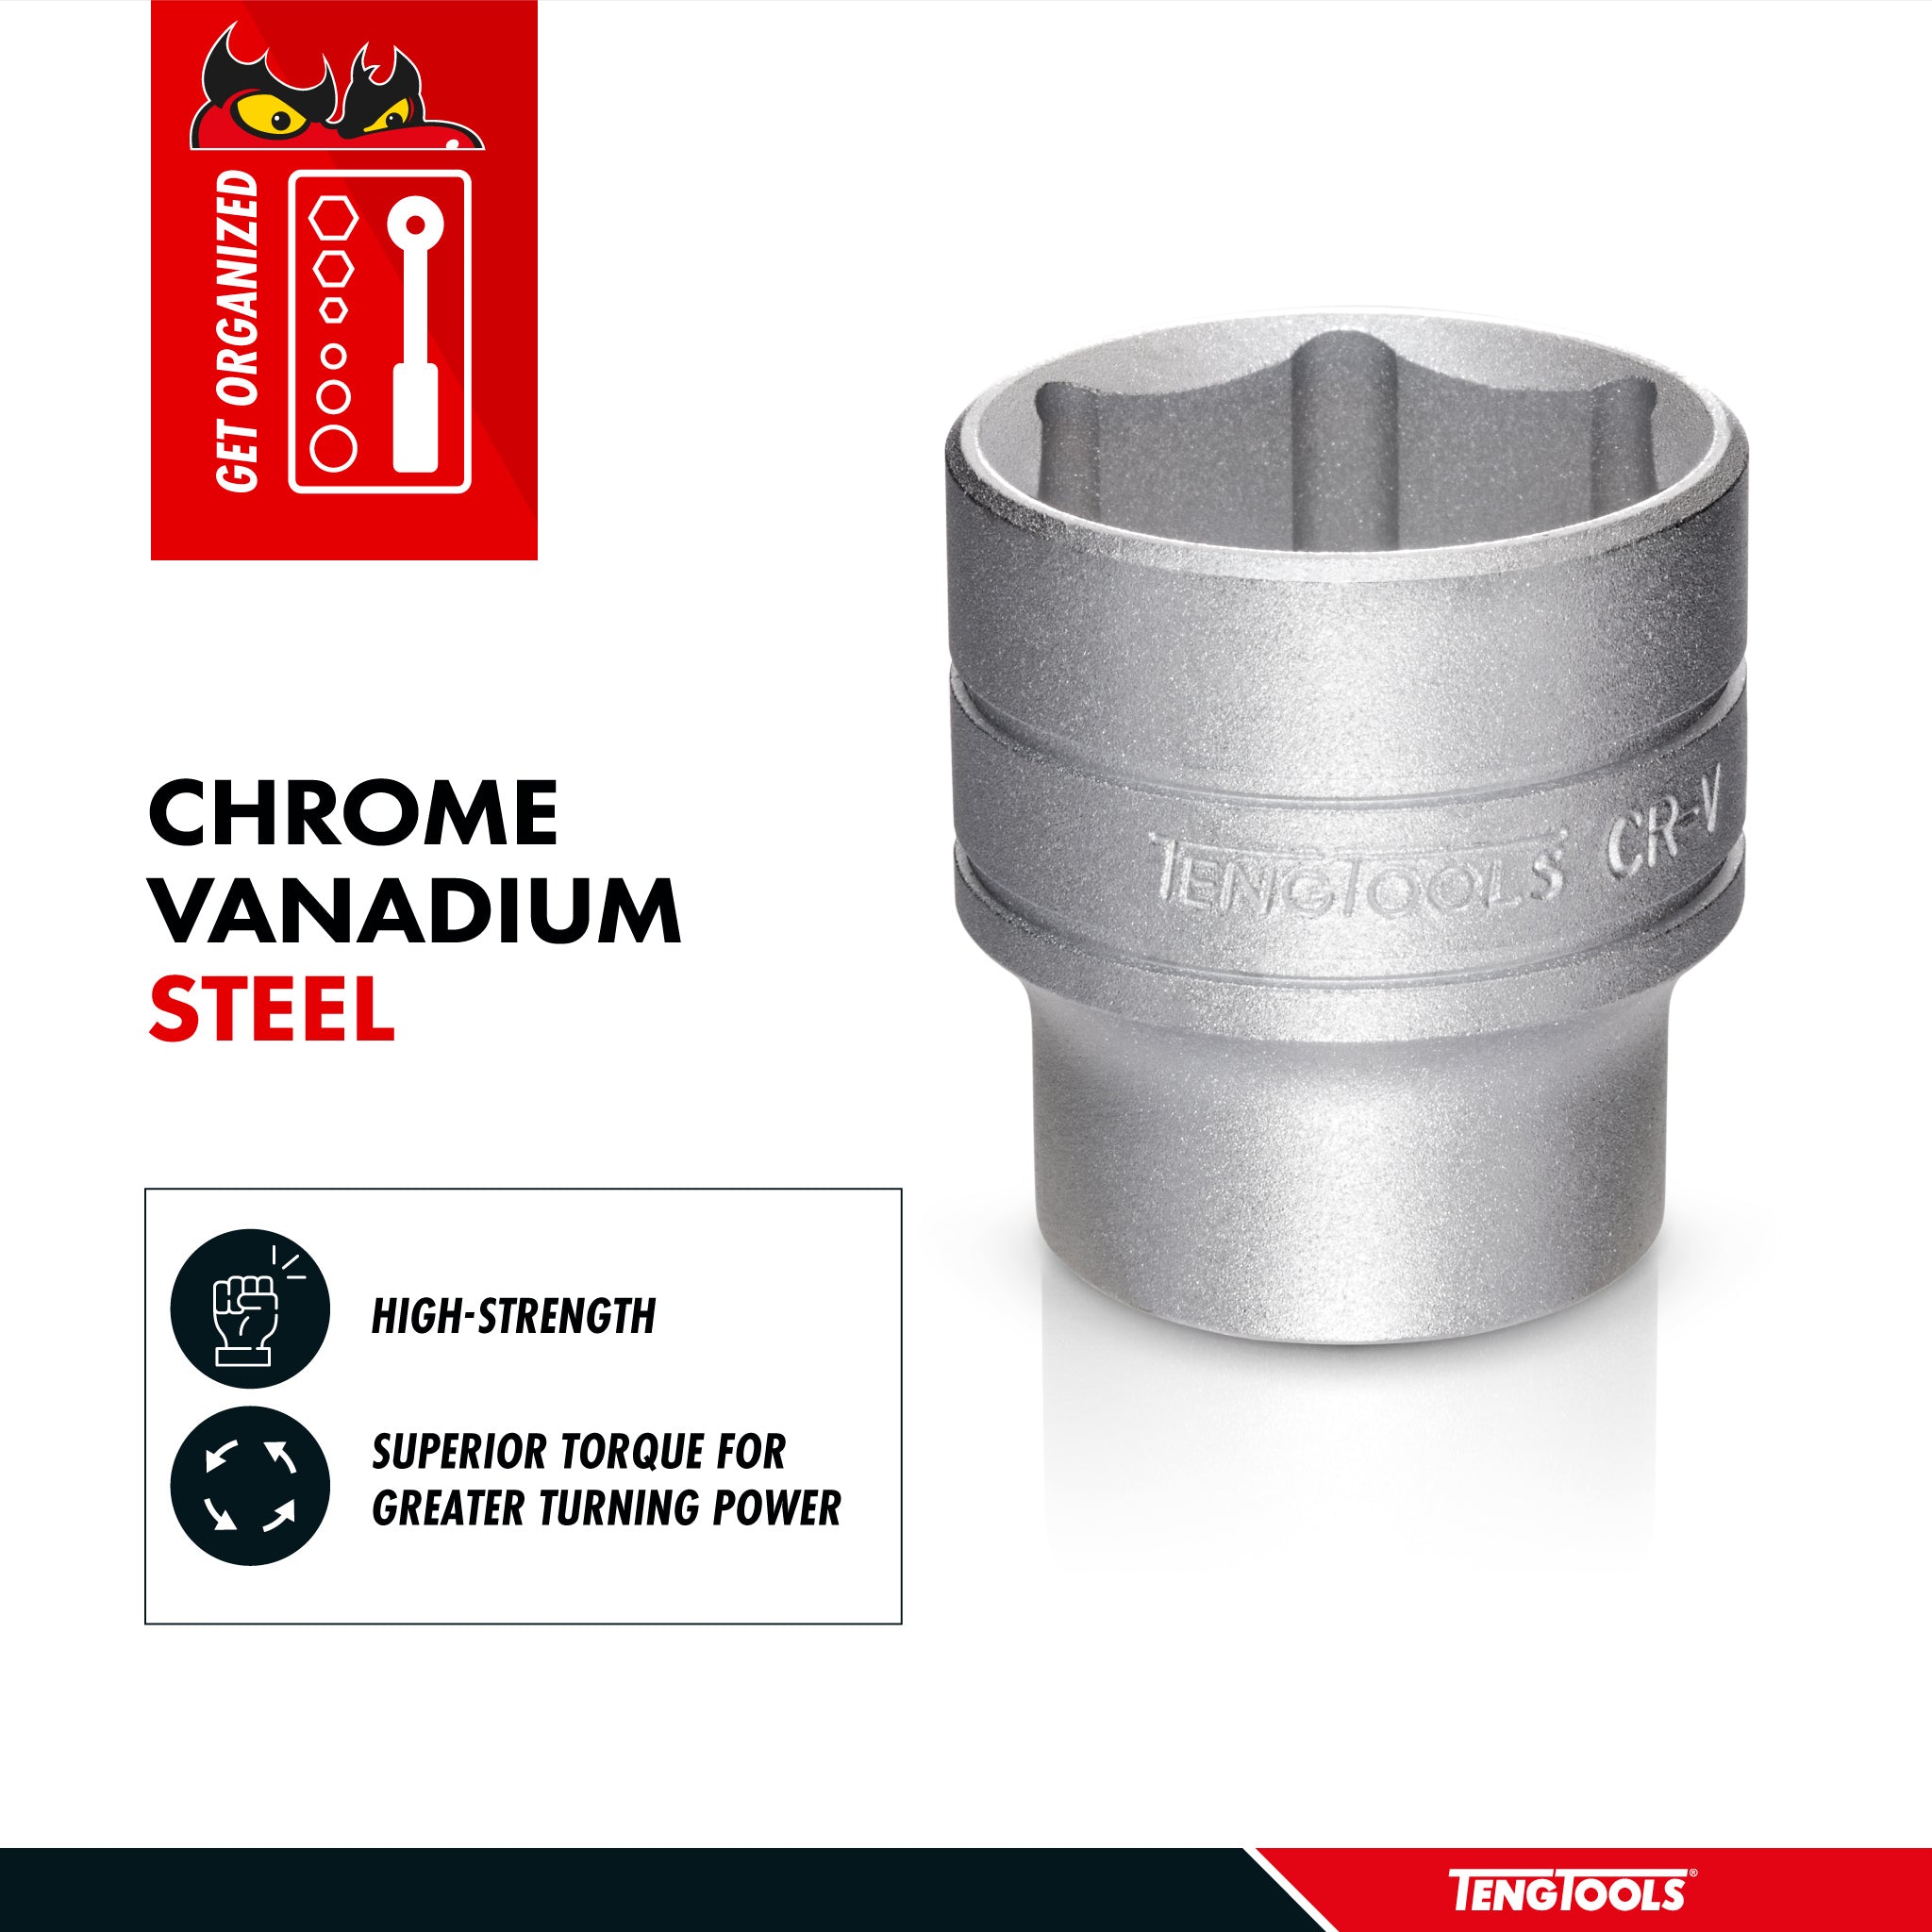 Teng Tools 6 Point SAE Shallow 3/8 Inch Drive Chrome Vanadium Sockets - 3/4